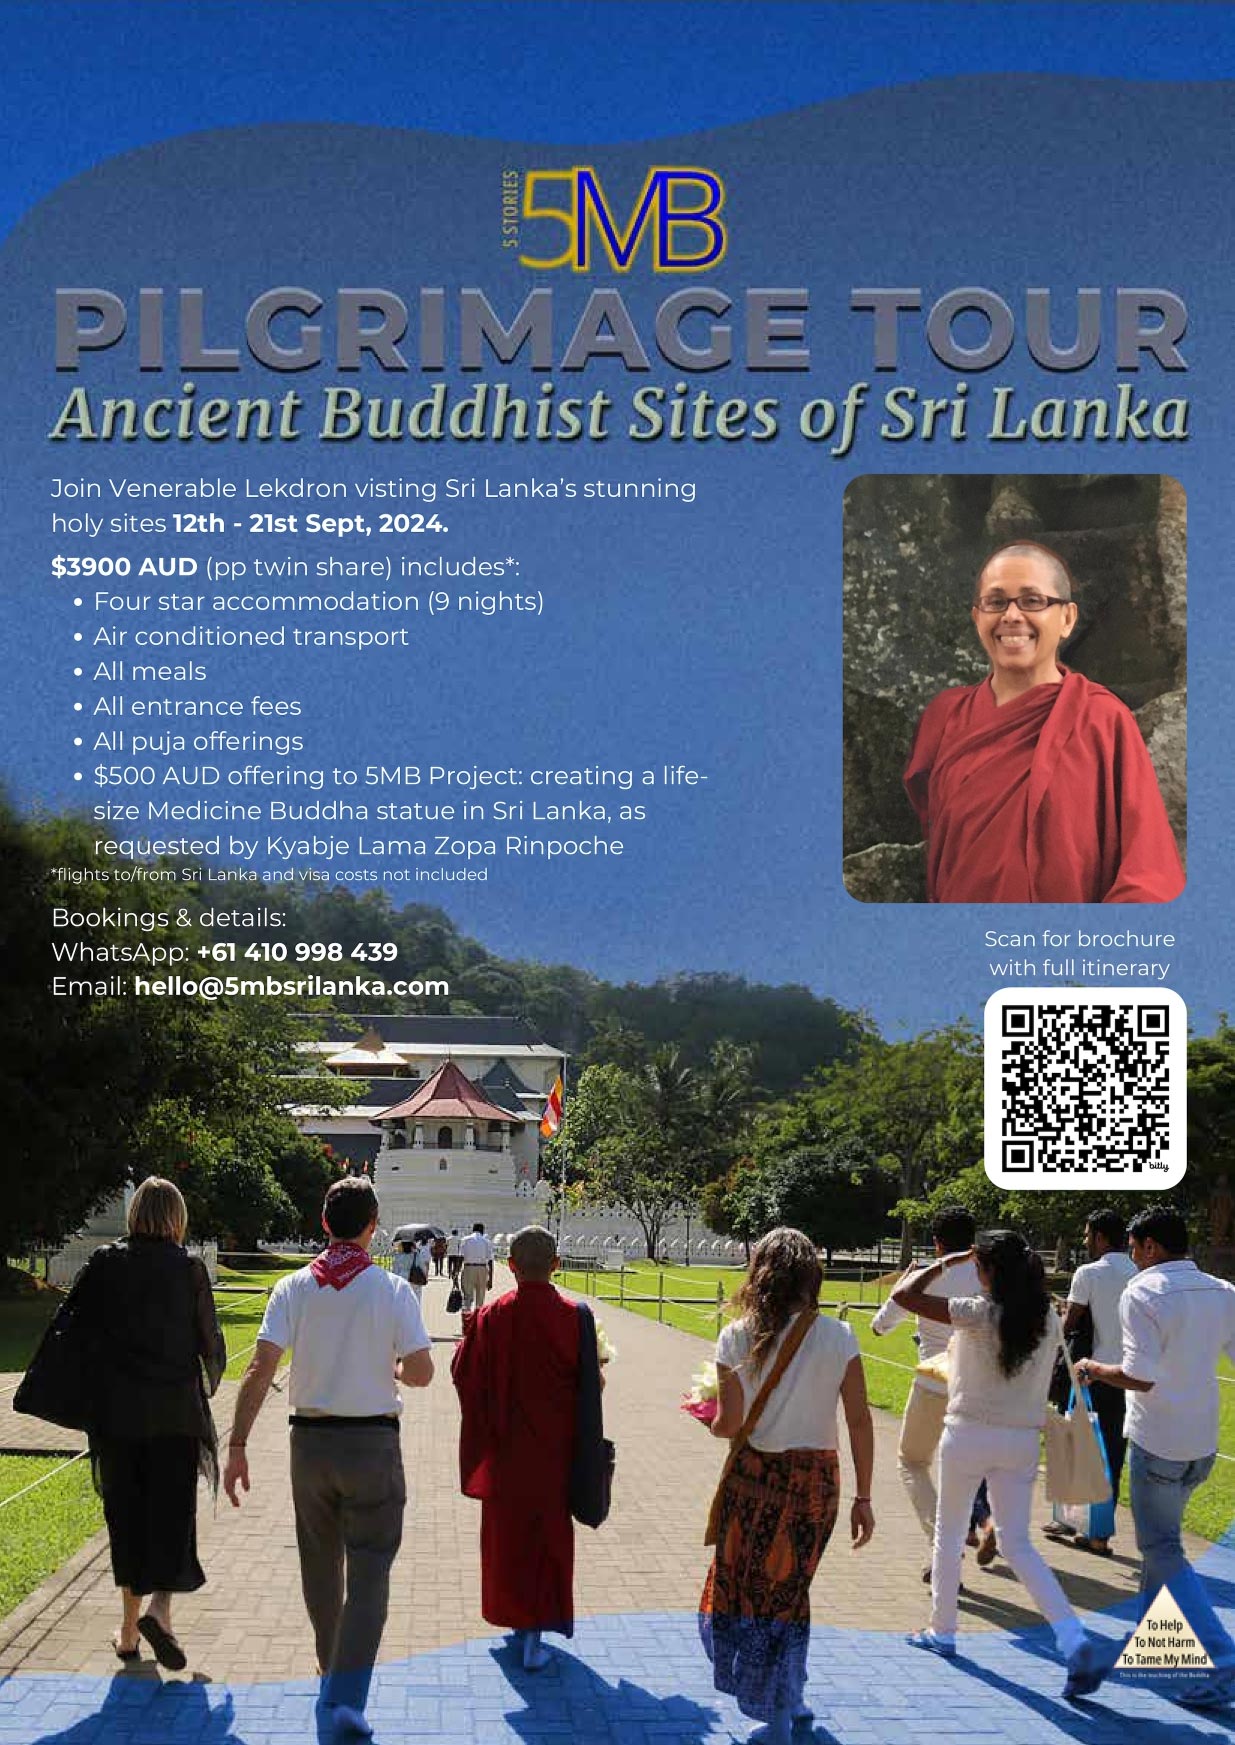 5MB Pilgrimage Tour - Ancient Buddhist Sites of Sri Lanka